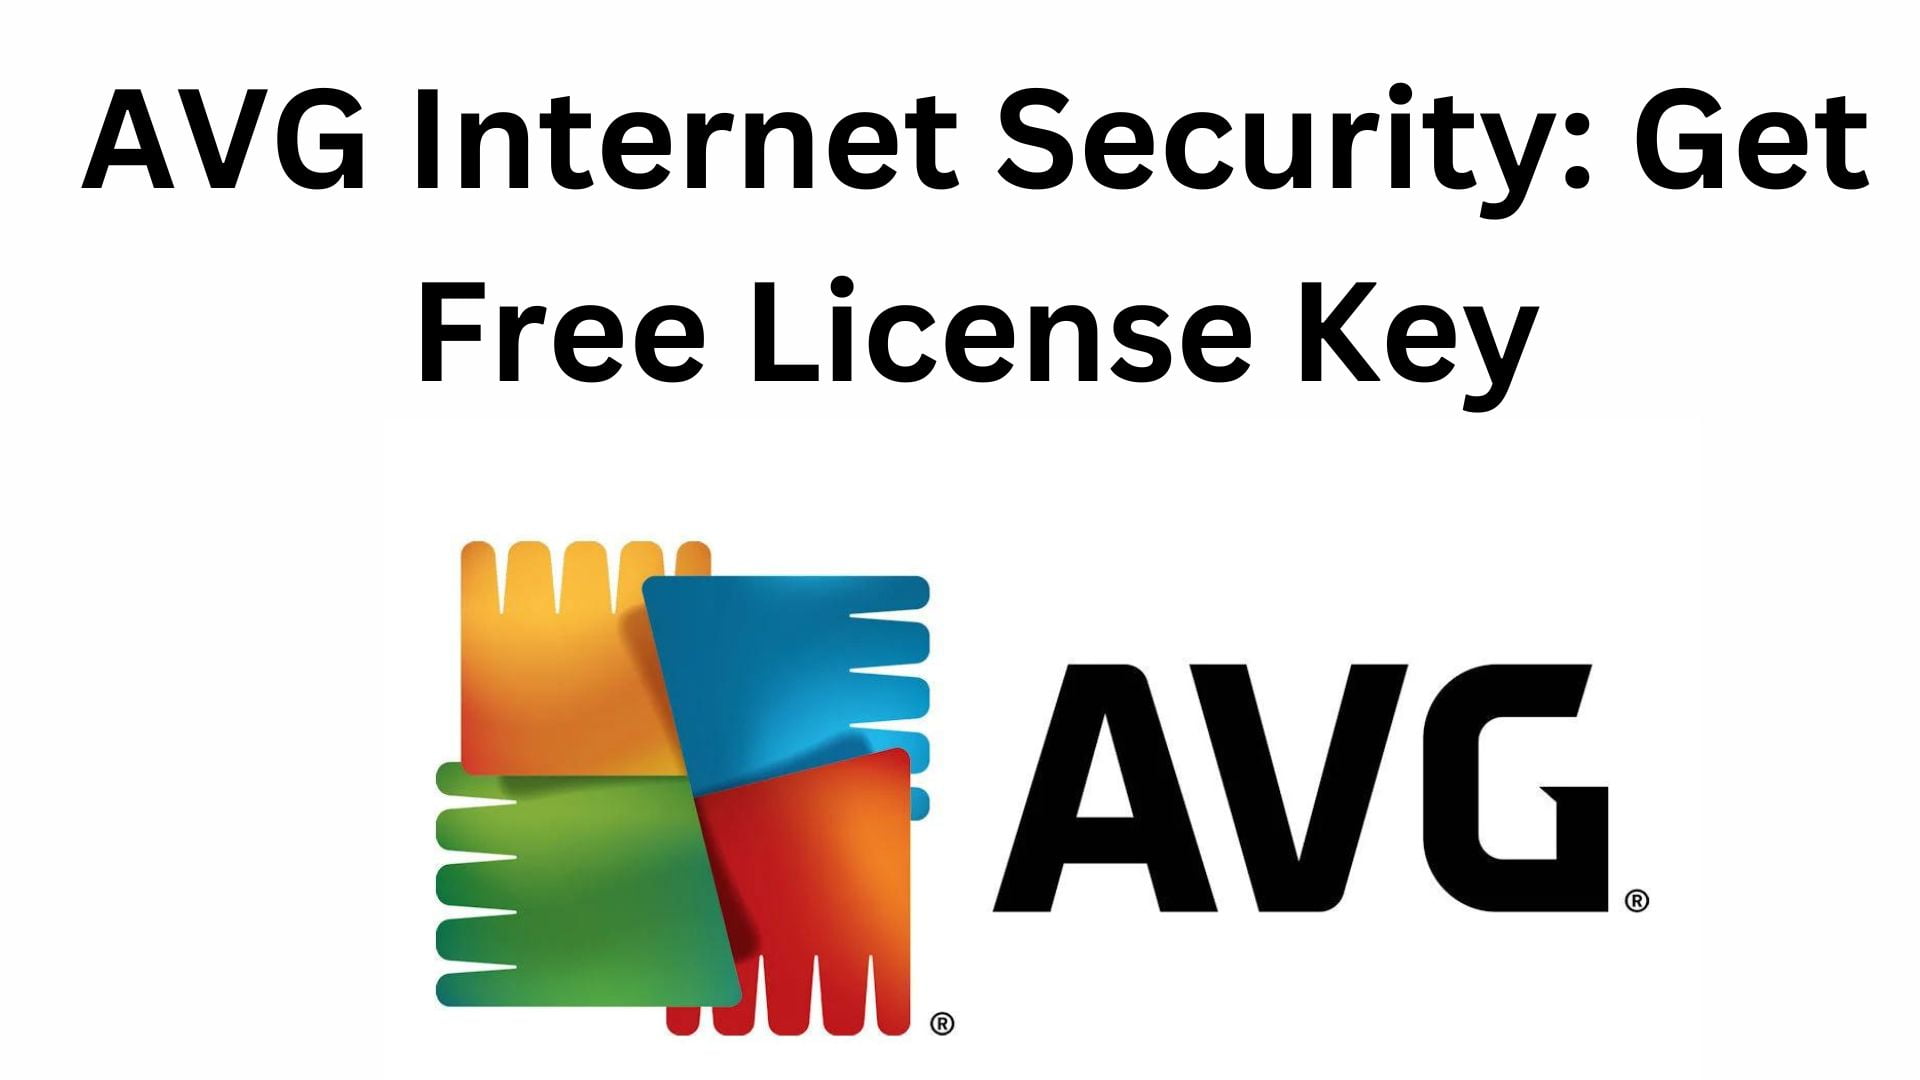 Avg Internet Security: Get Free License Key